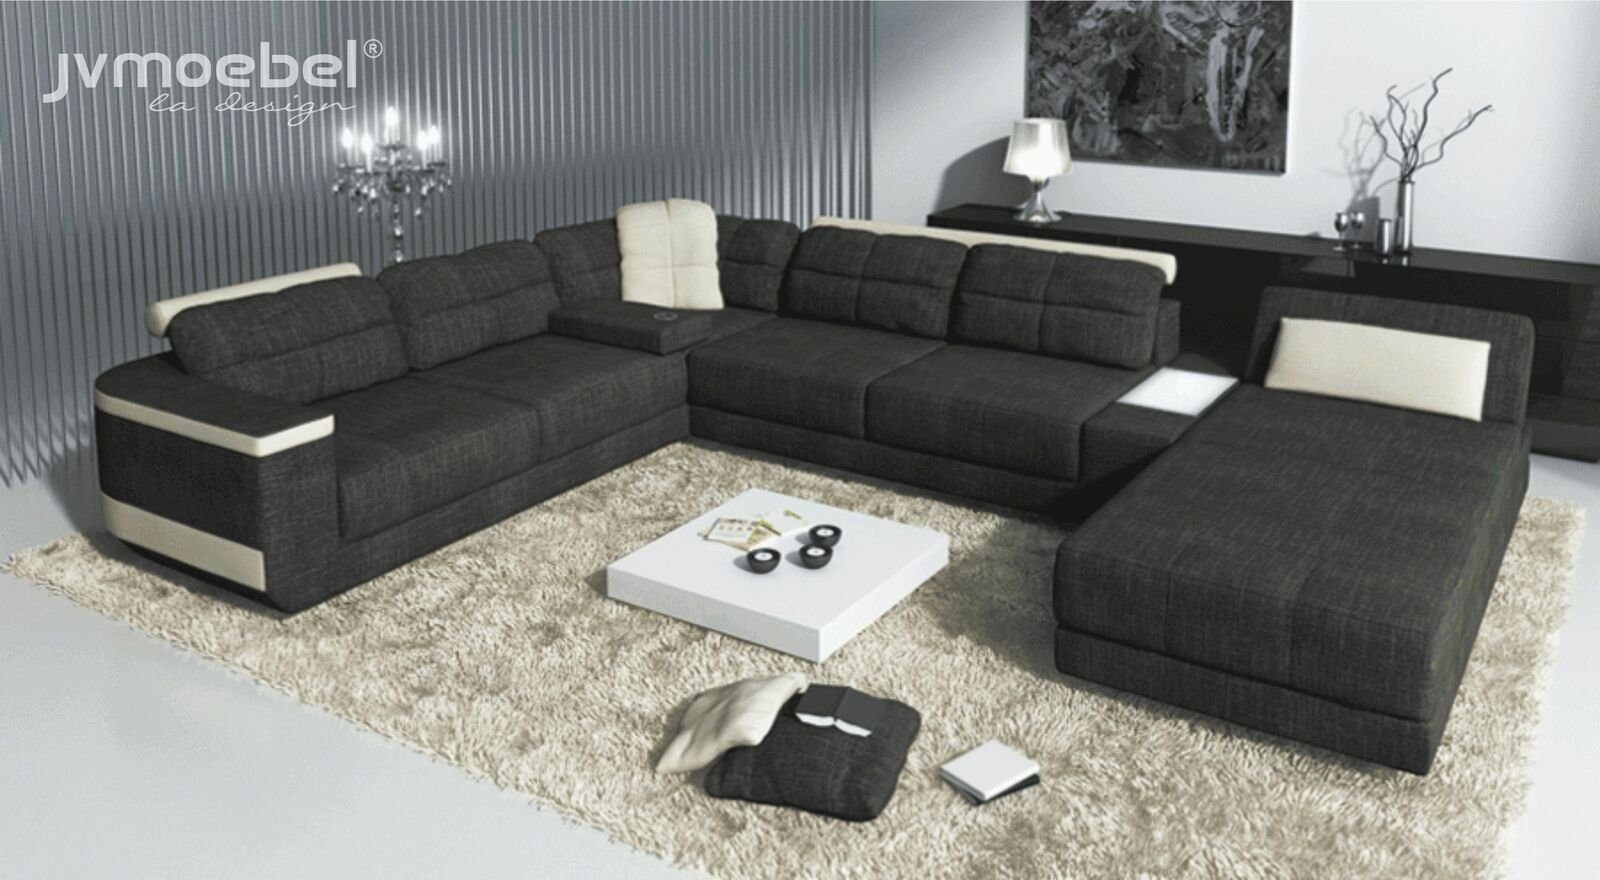 XXL Made Sofa Couch, JVmoebel Designer Ecksofa Europe Wohnlandschaft Ecksofa in U-Form